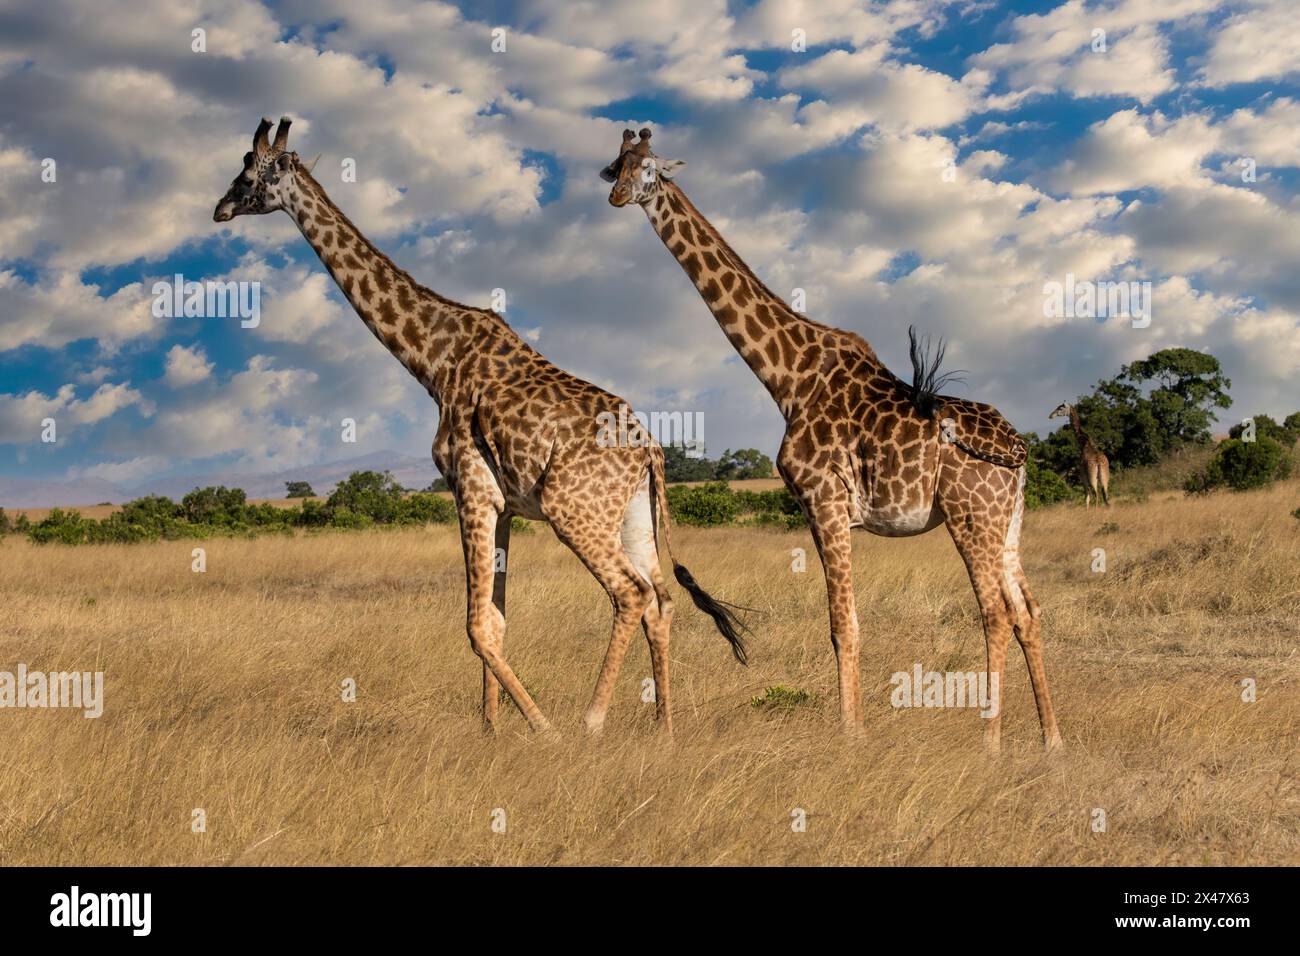 Africa, Kenya, Masai Mara National Reserve. Digital composite sky and giraffe. Stock Photo